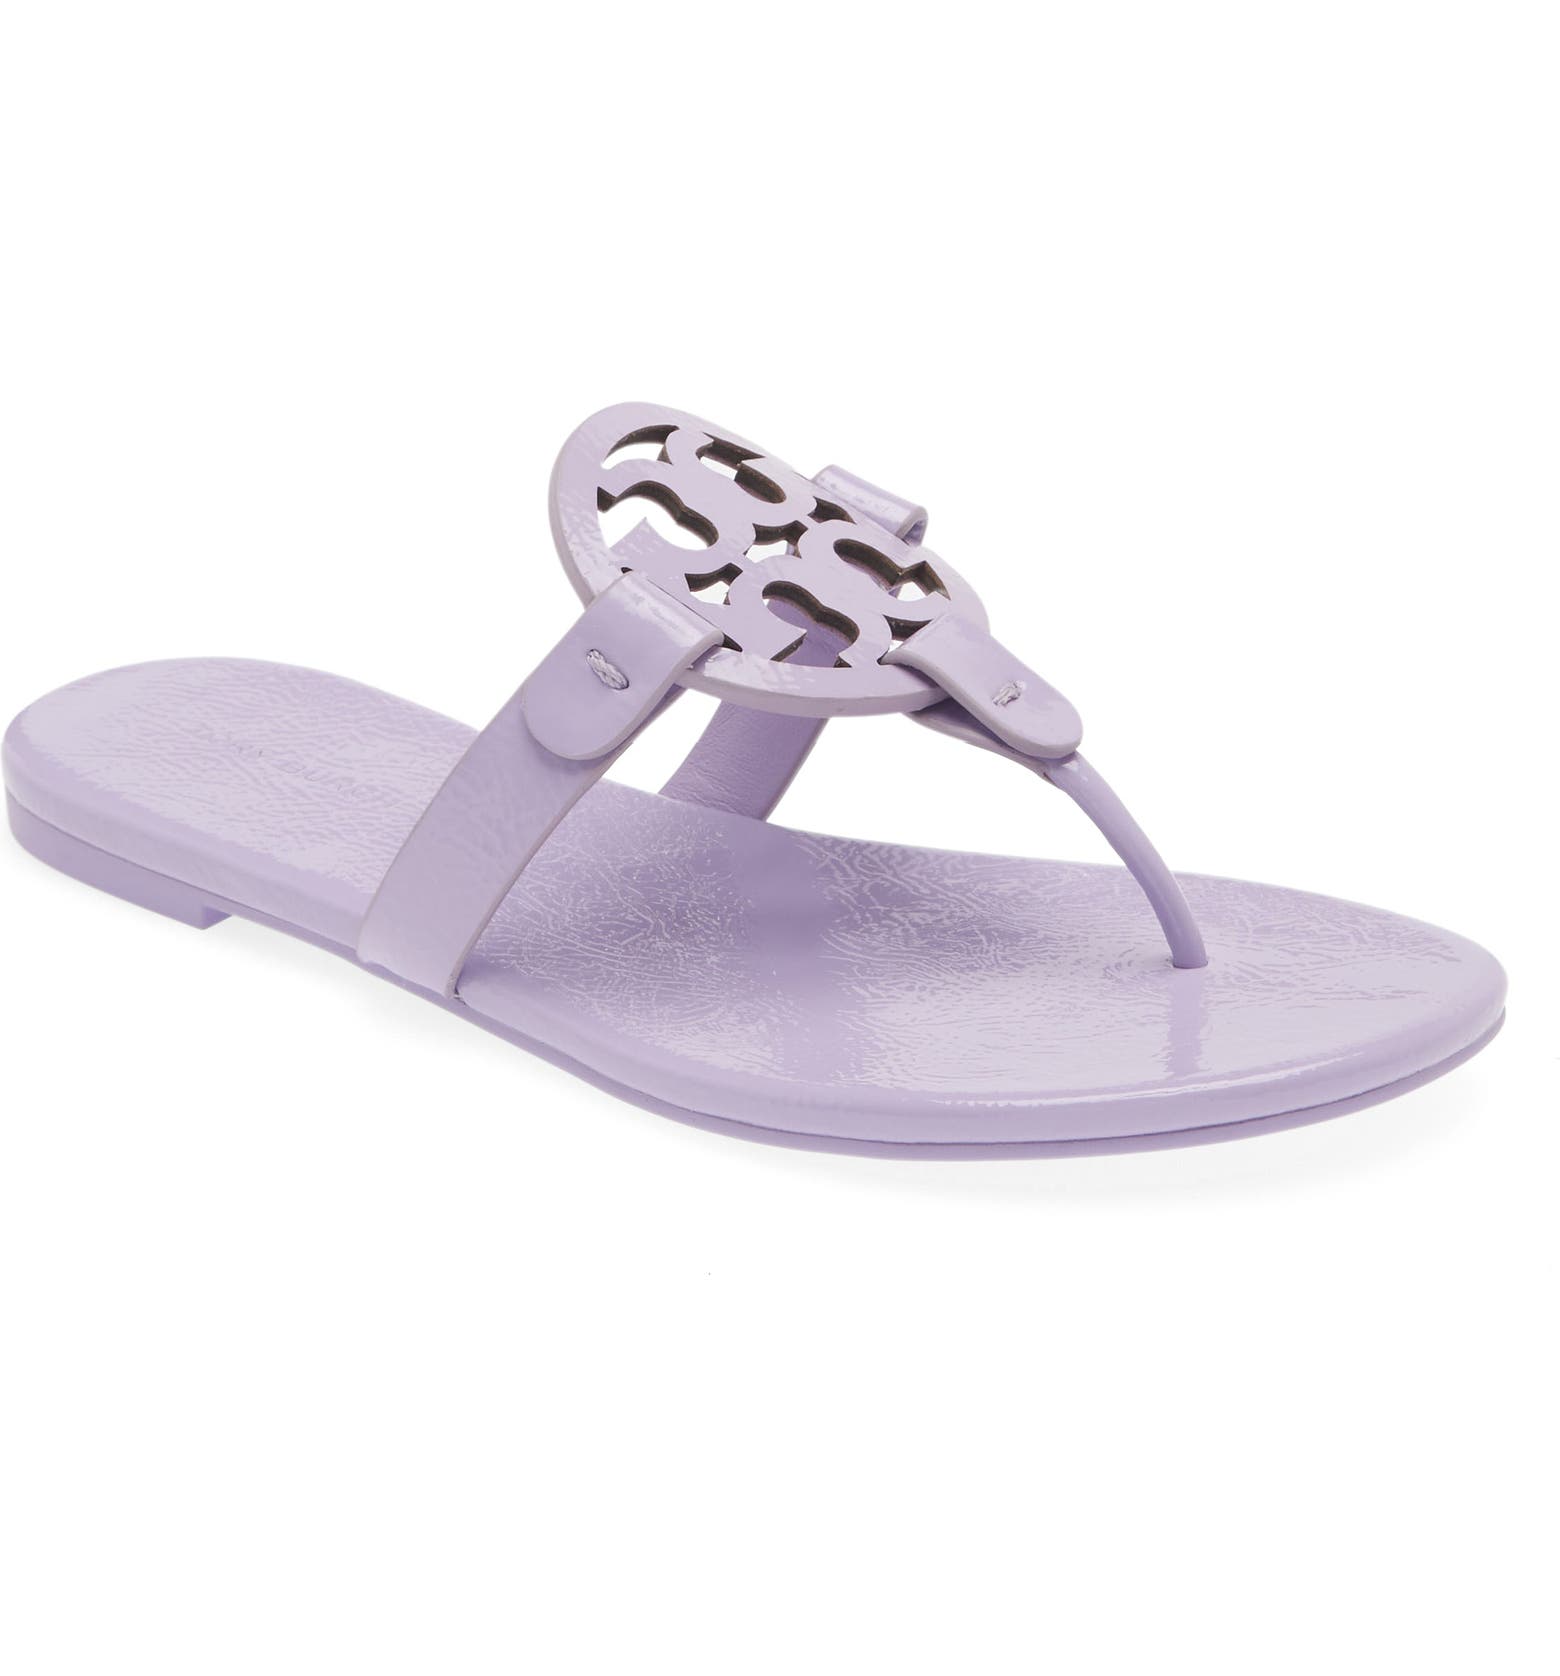 Lavender purple Tory Burch Miller sandals